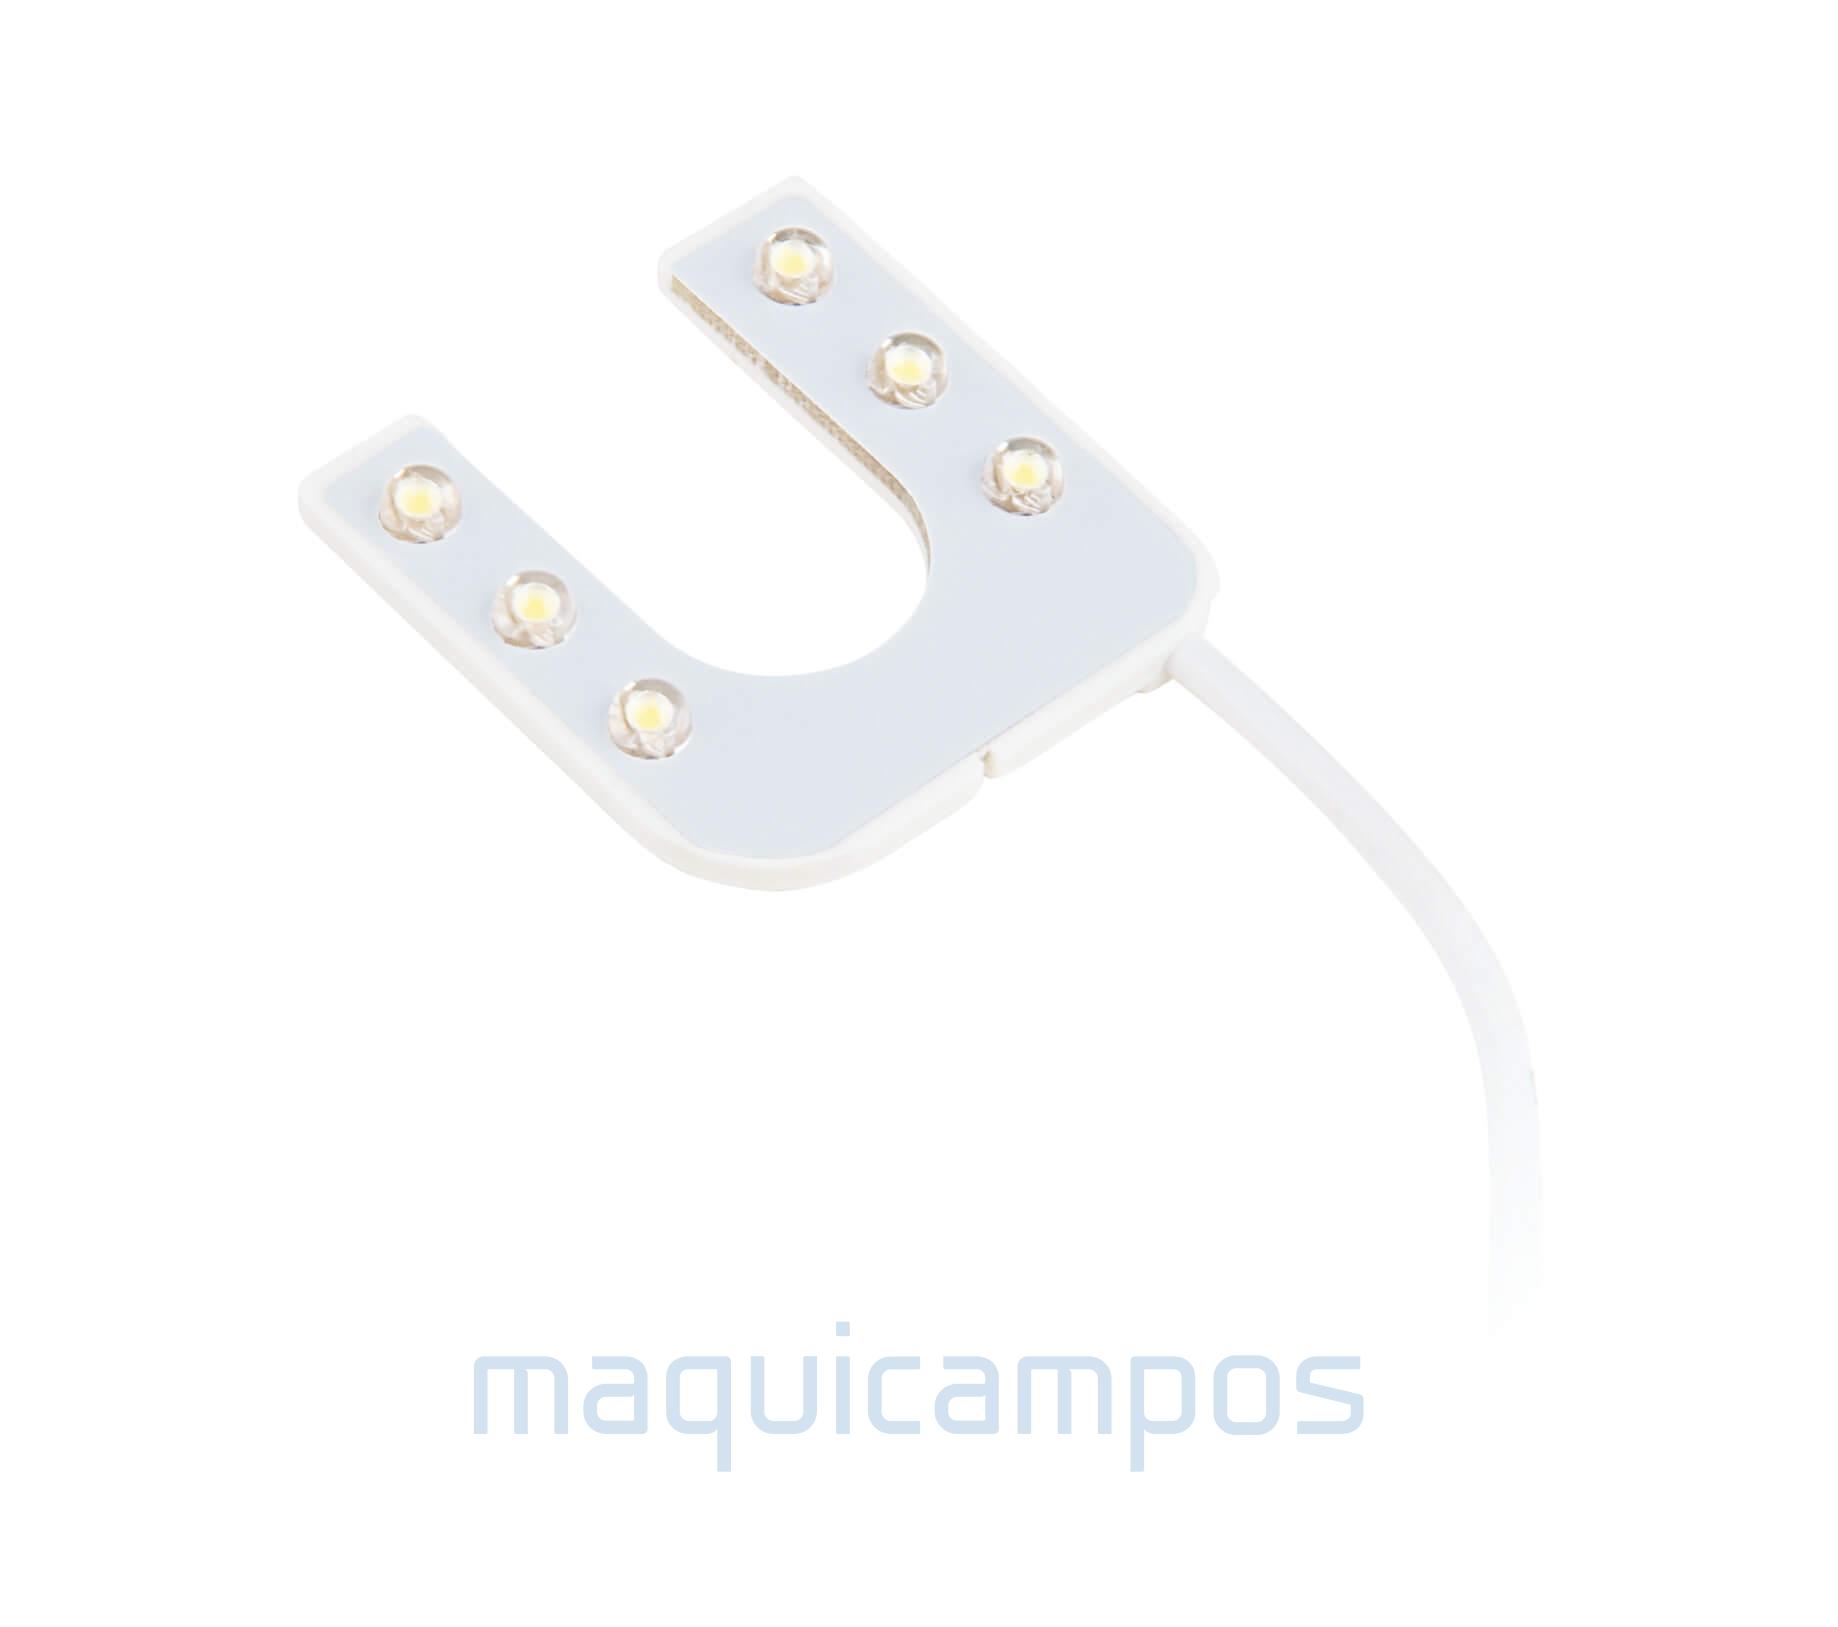 Maquic TD-6U 1W, 12V White Light